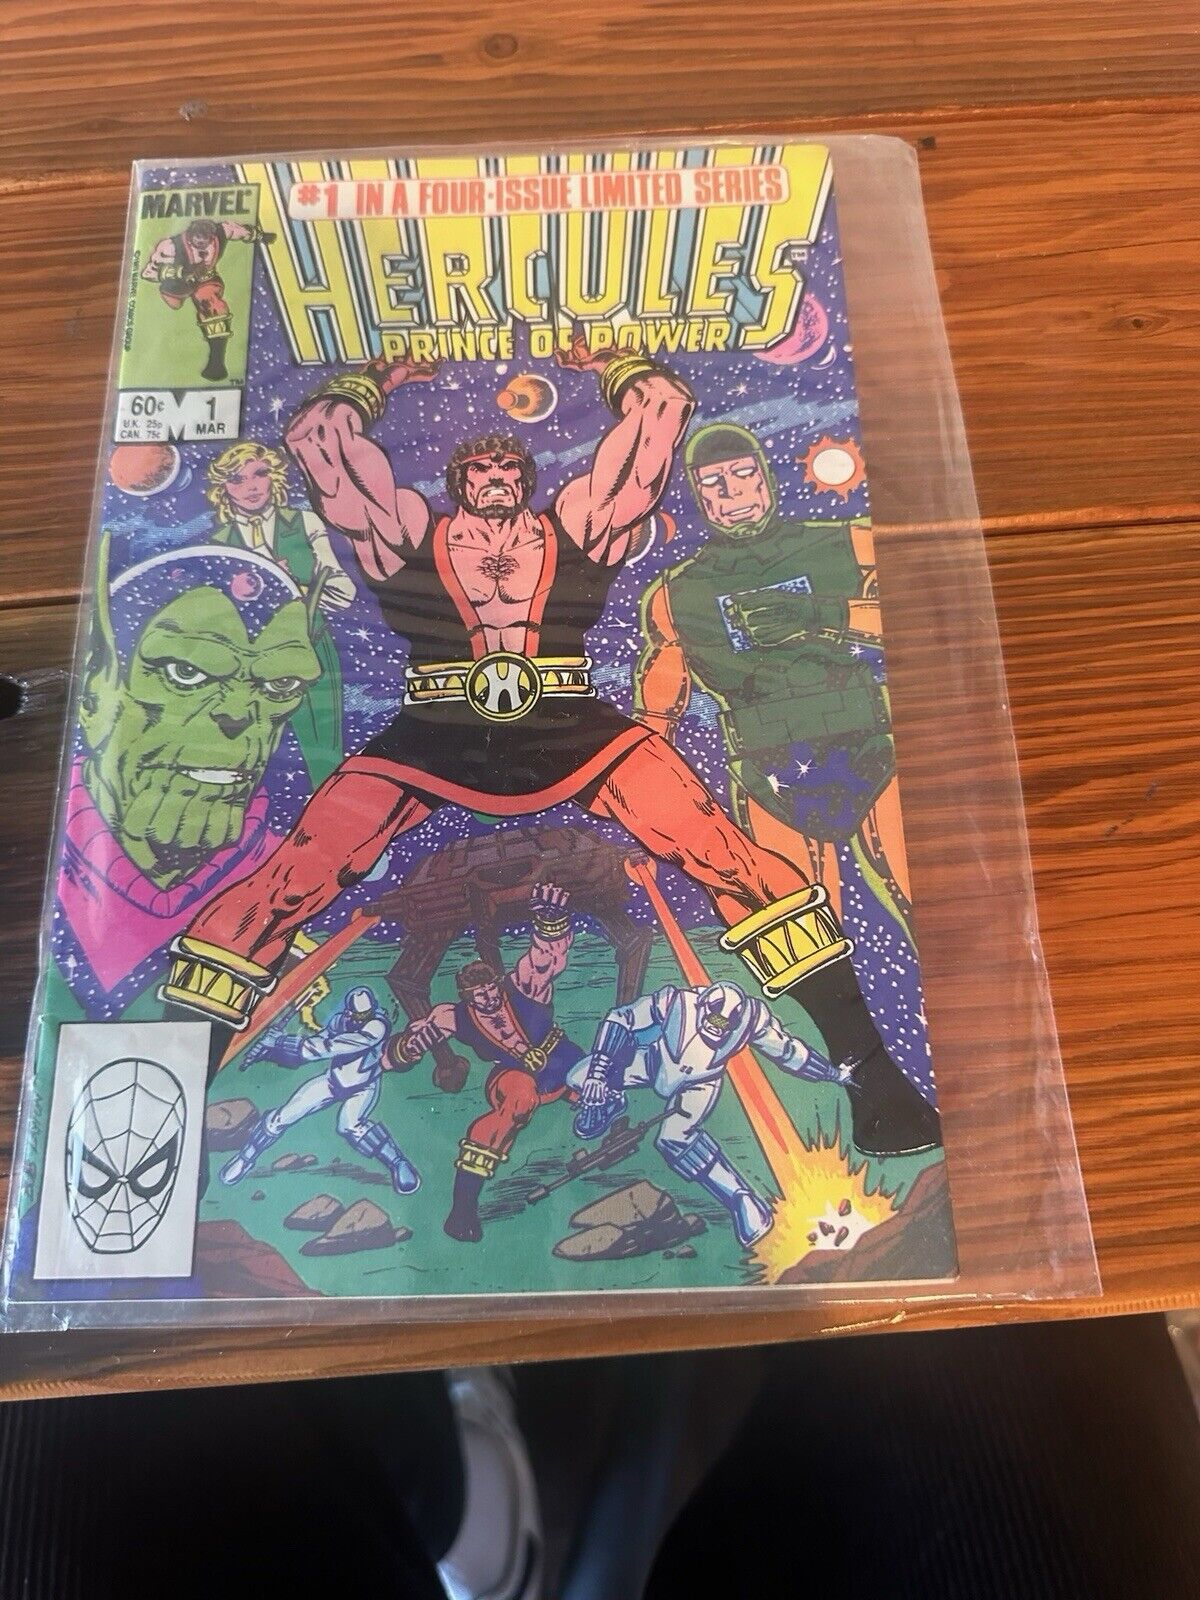 Hercules Prince of Power #1 (Mar 1984 Marvel)